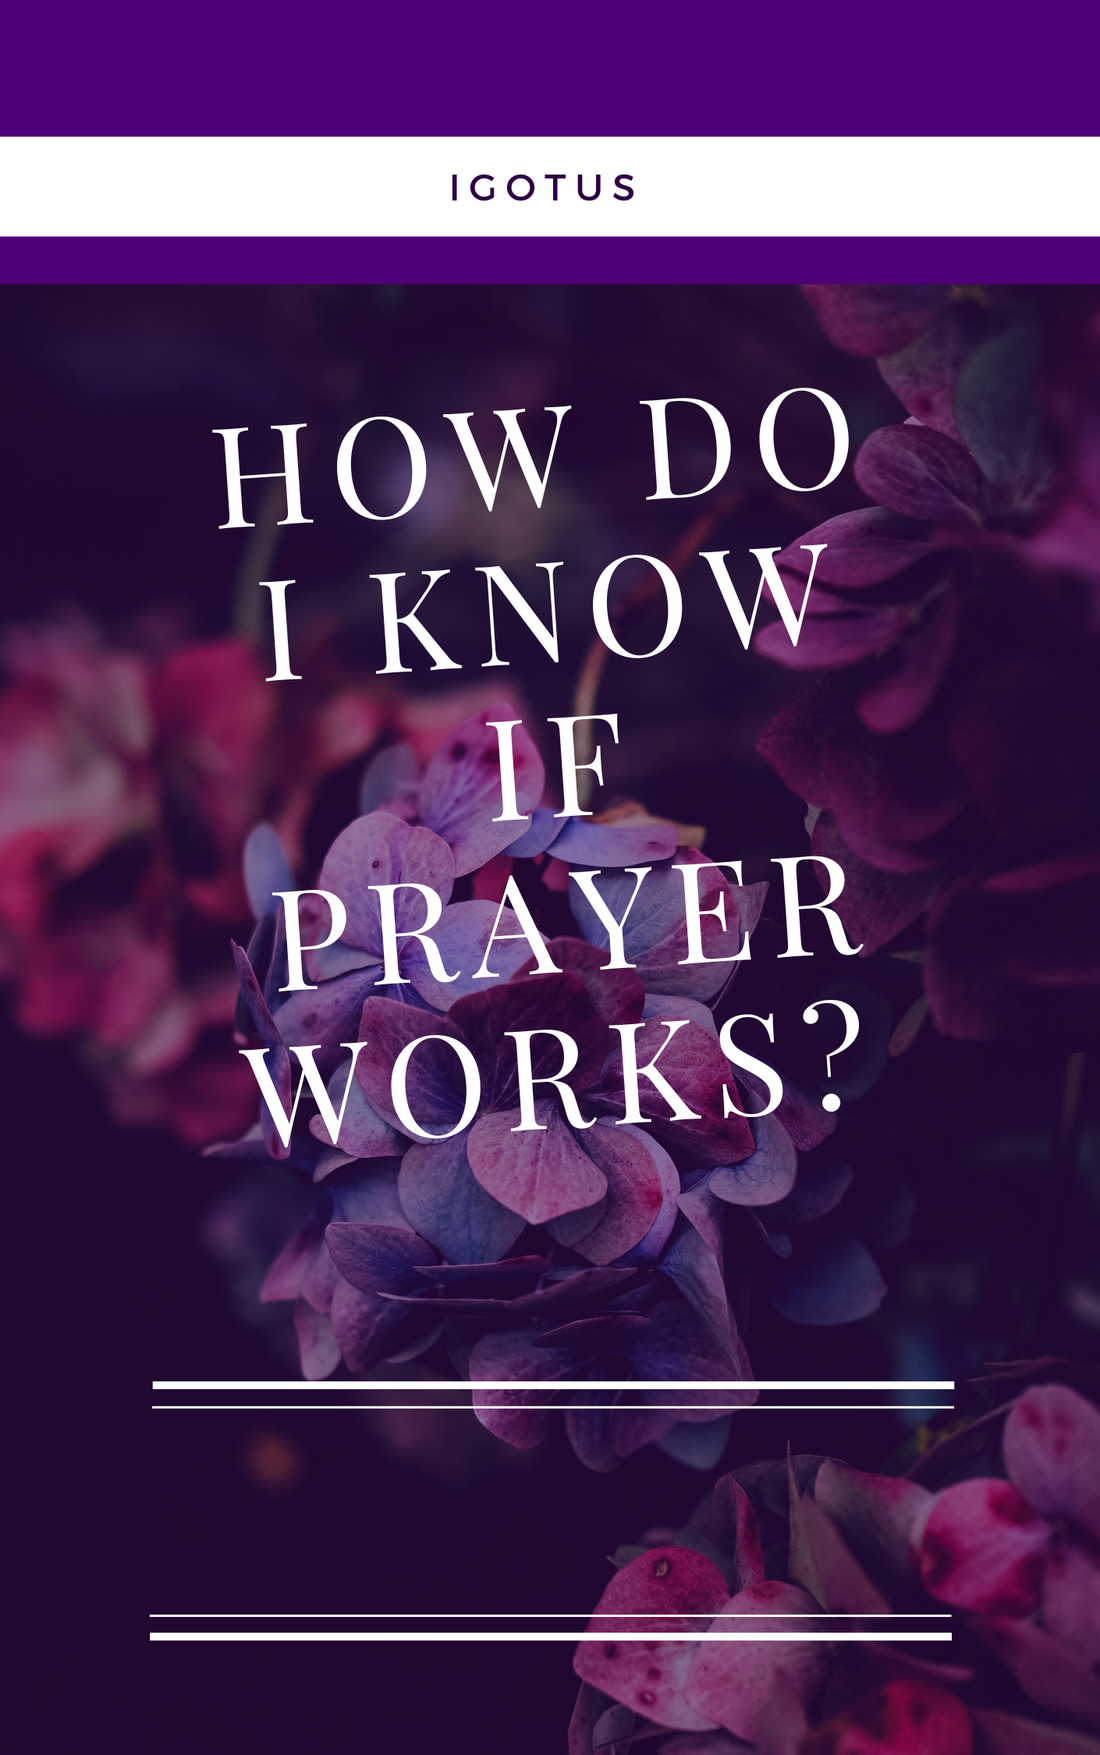 How do i know if prayer works?